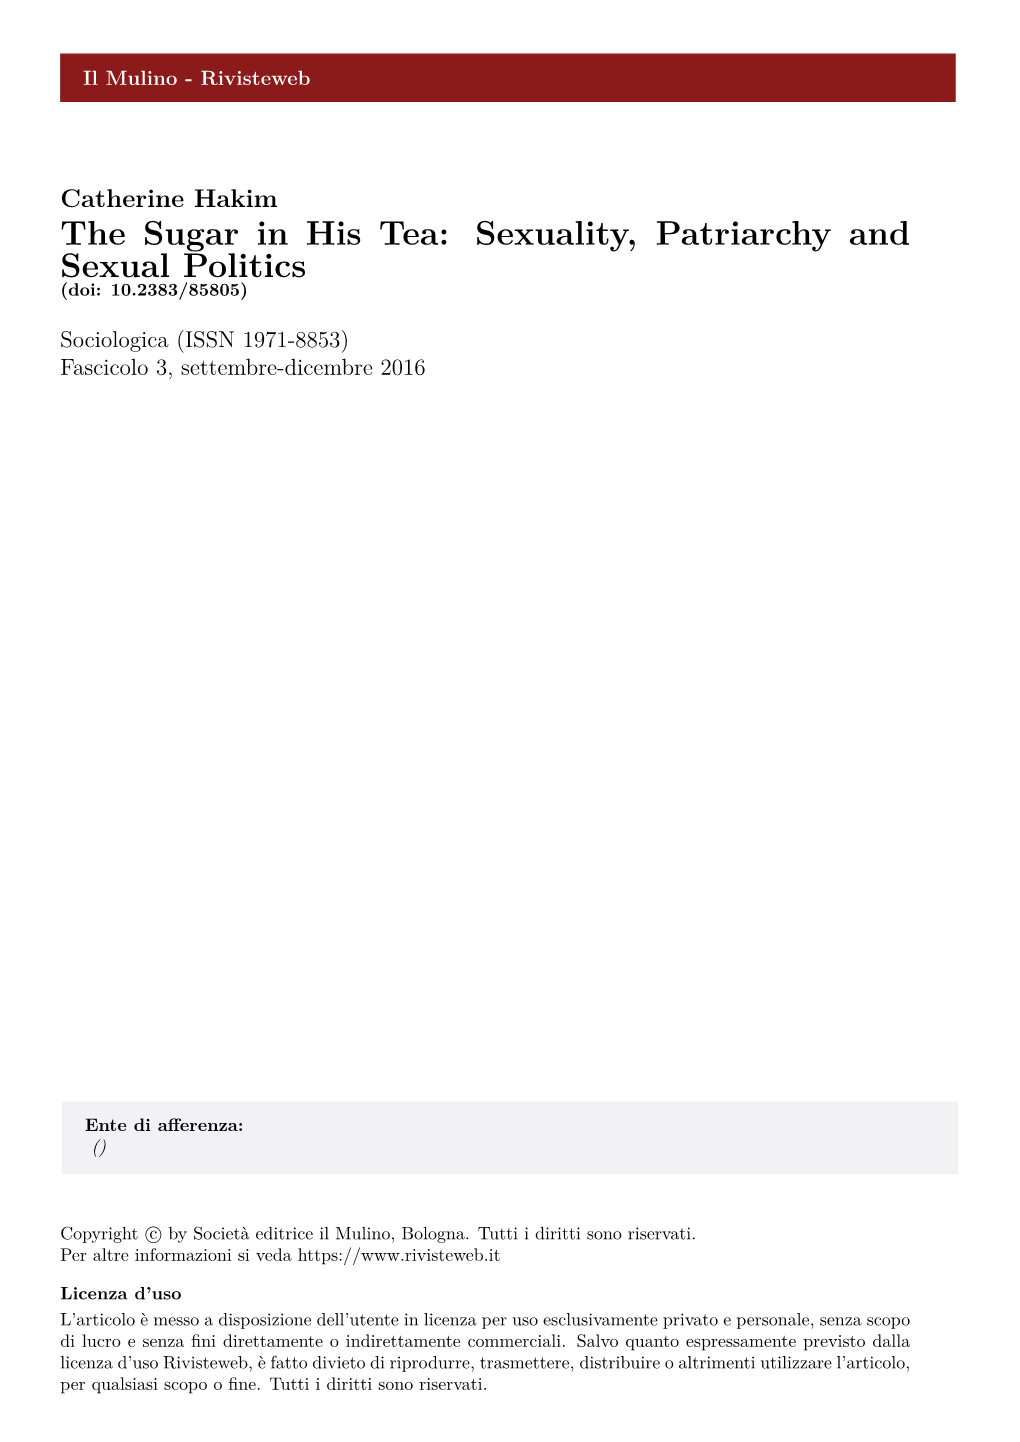 Sexuality, Patriarchy and Sexual Politics (Doi: 10.2383/85805)